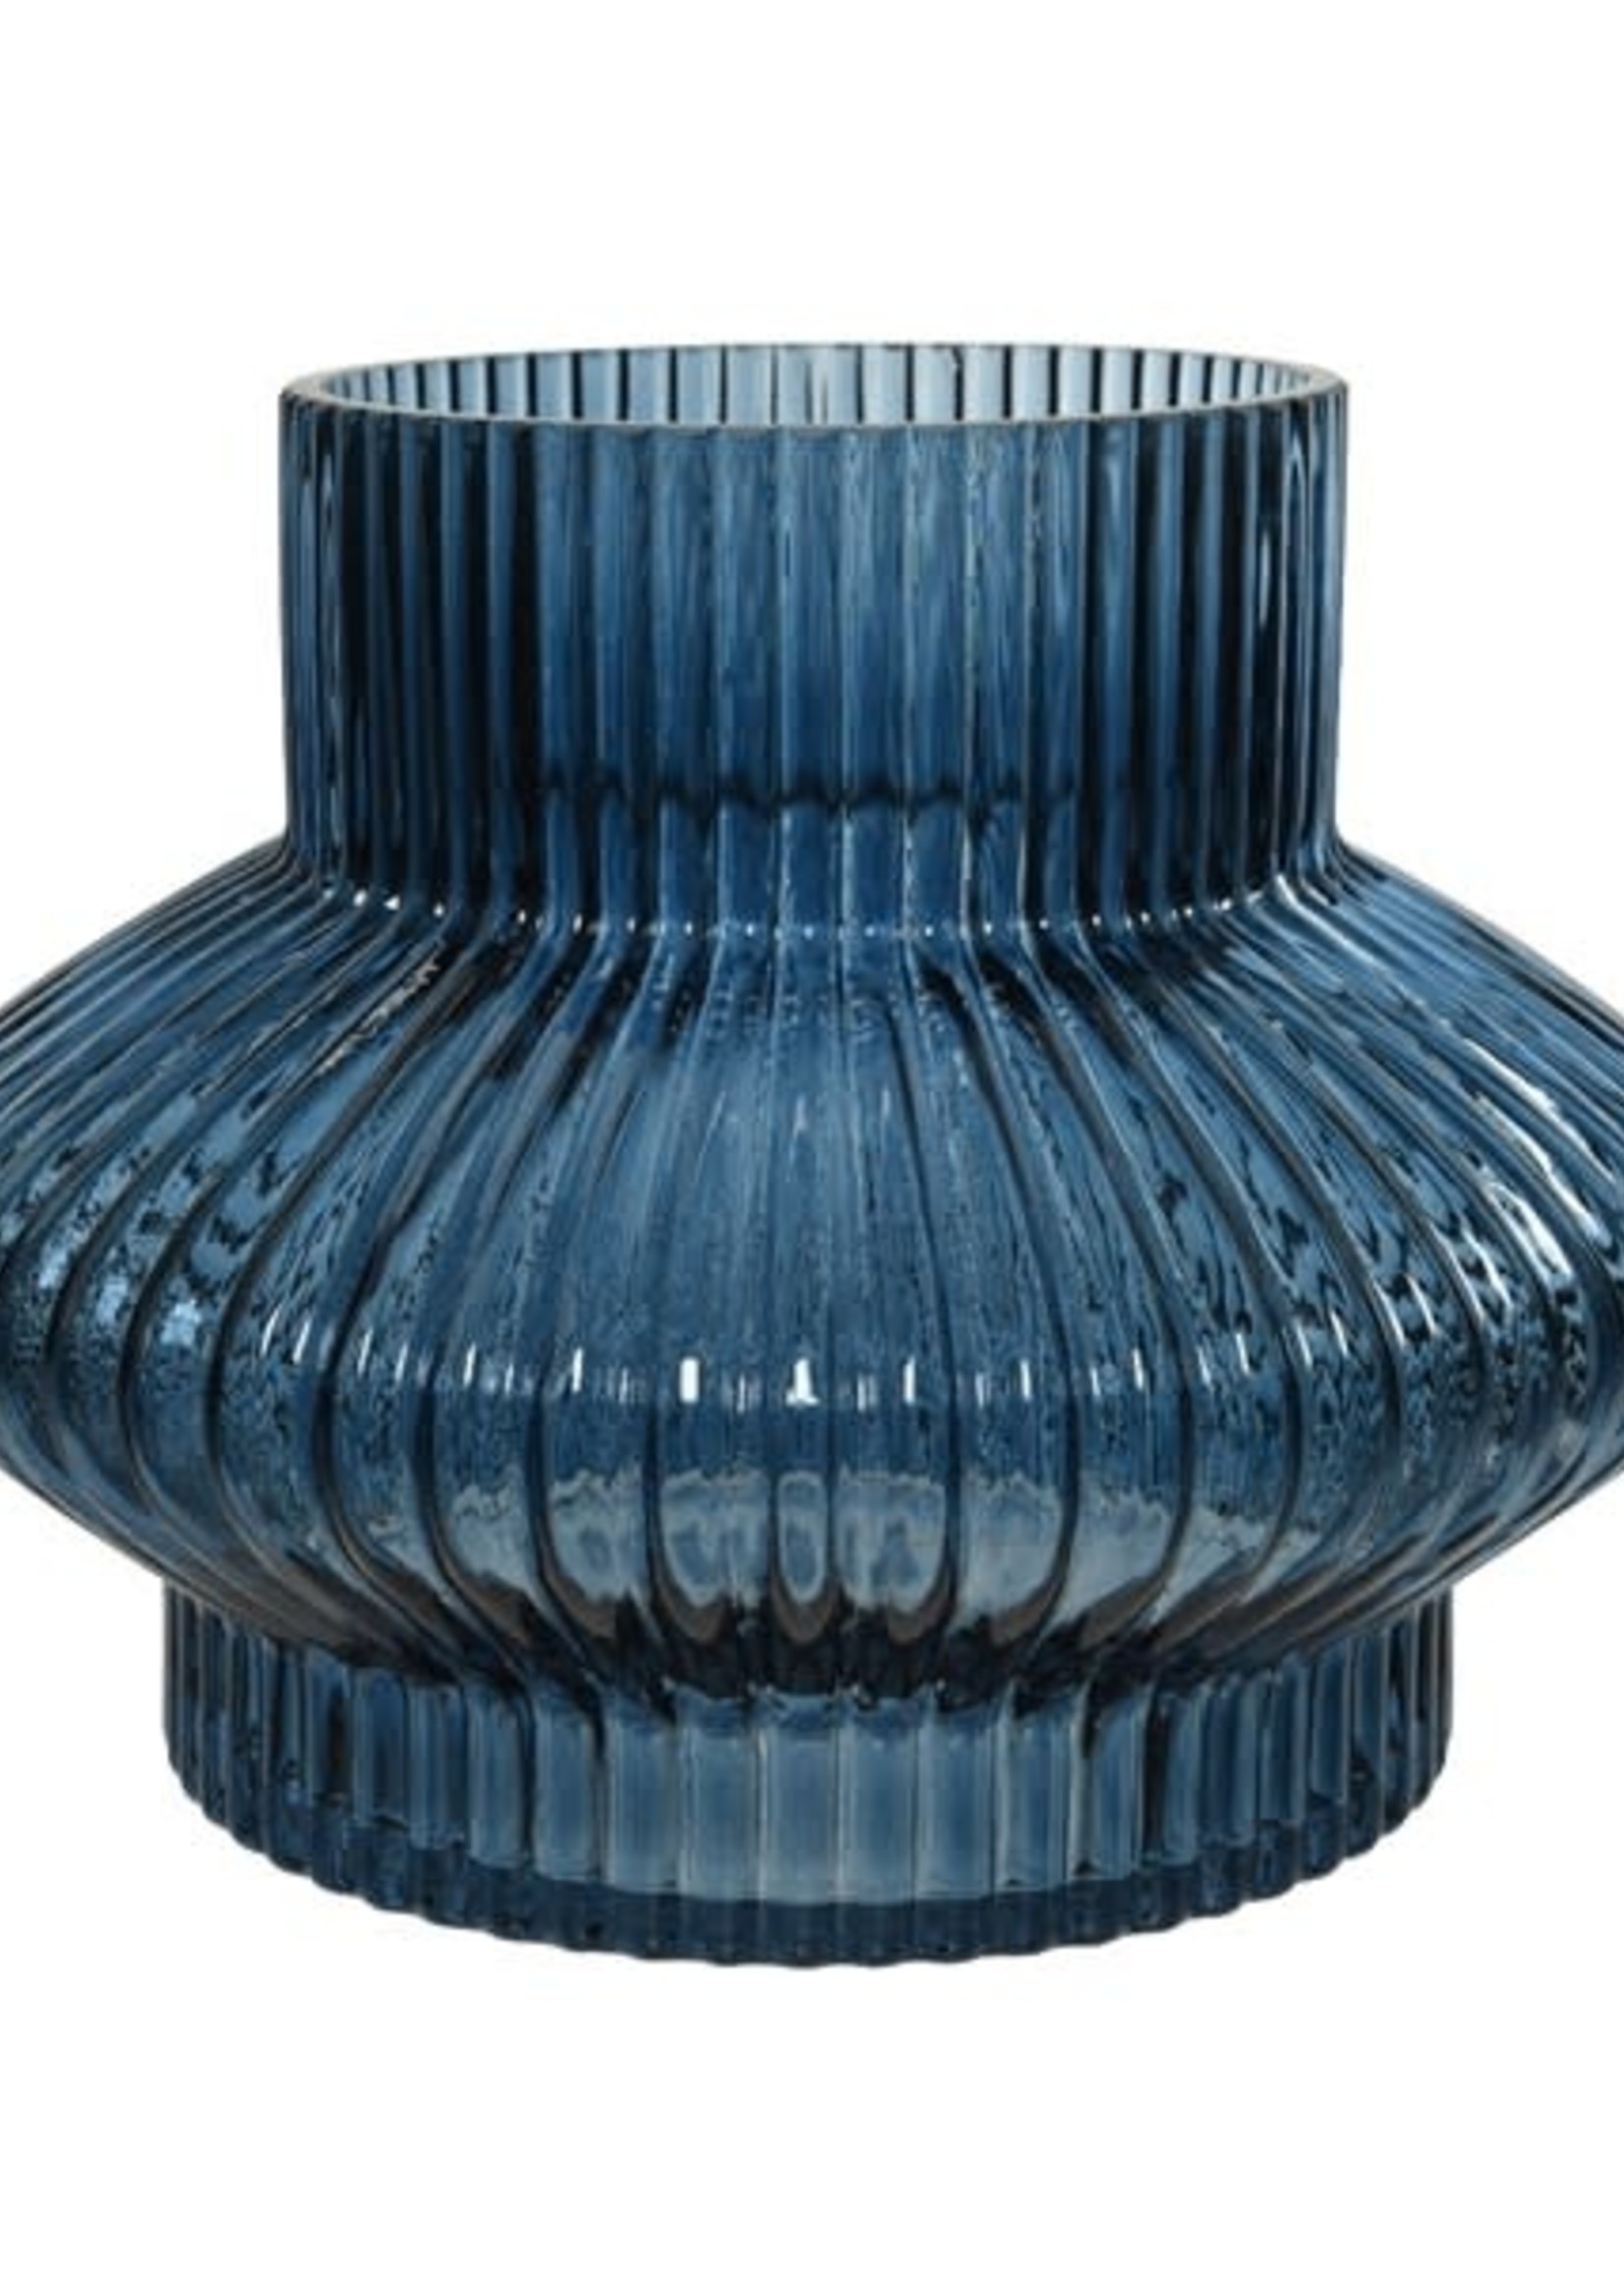 Decoris Blue Ribbed vase